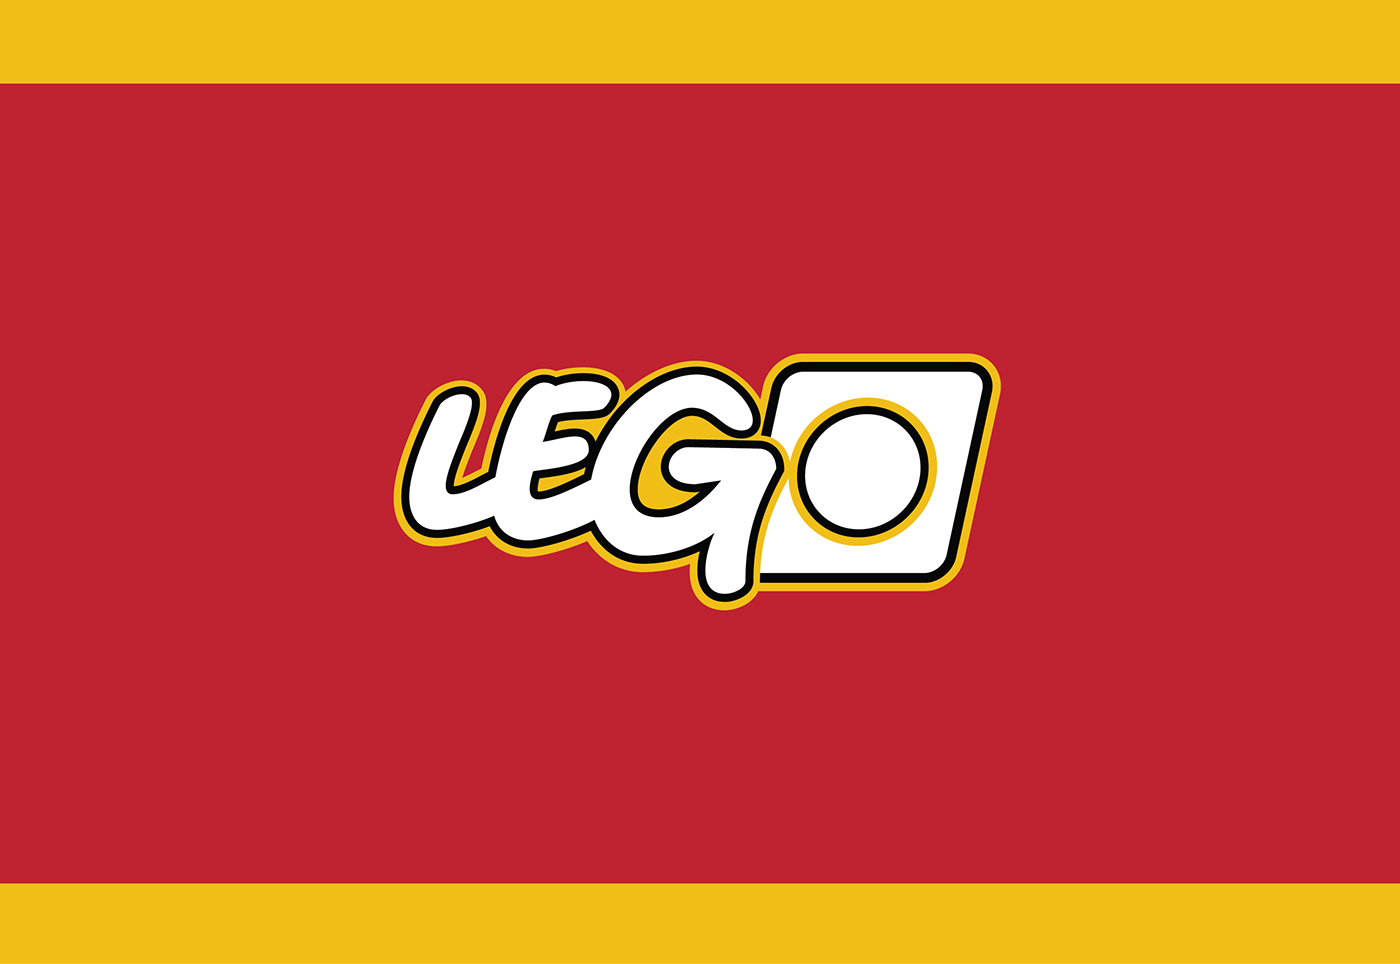 LEGO logo redesign history marko miladinovic doodleey Serbia srbija duplo mini figure